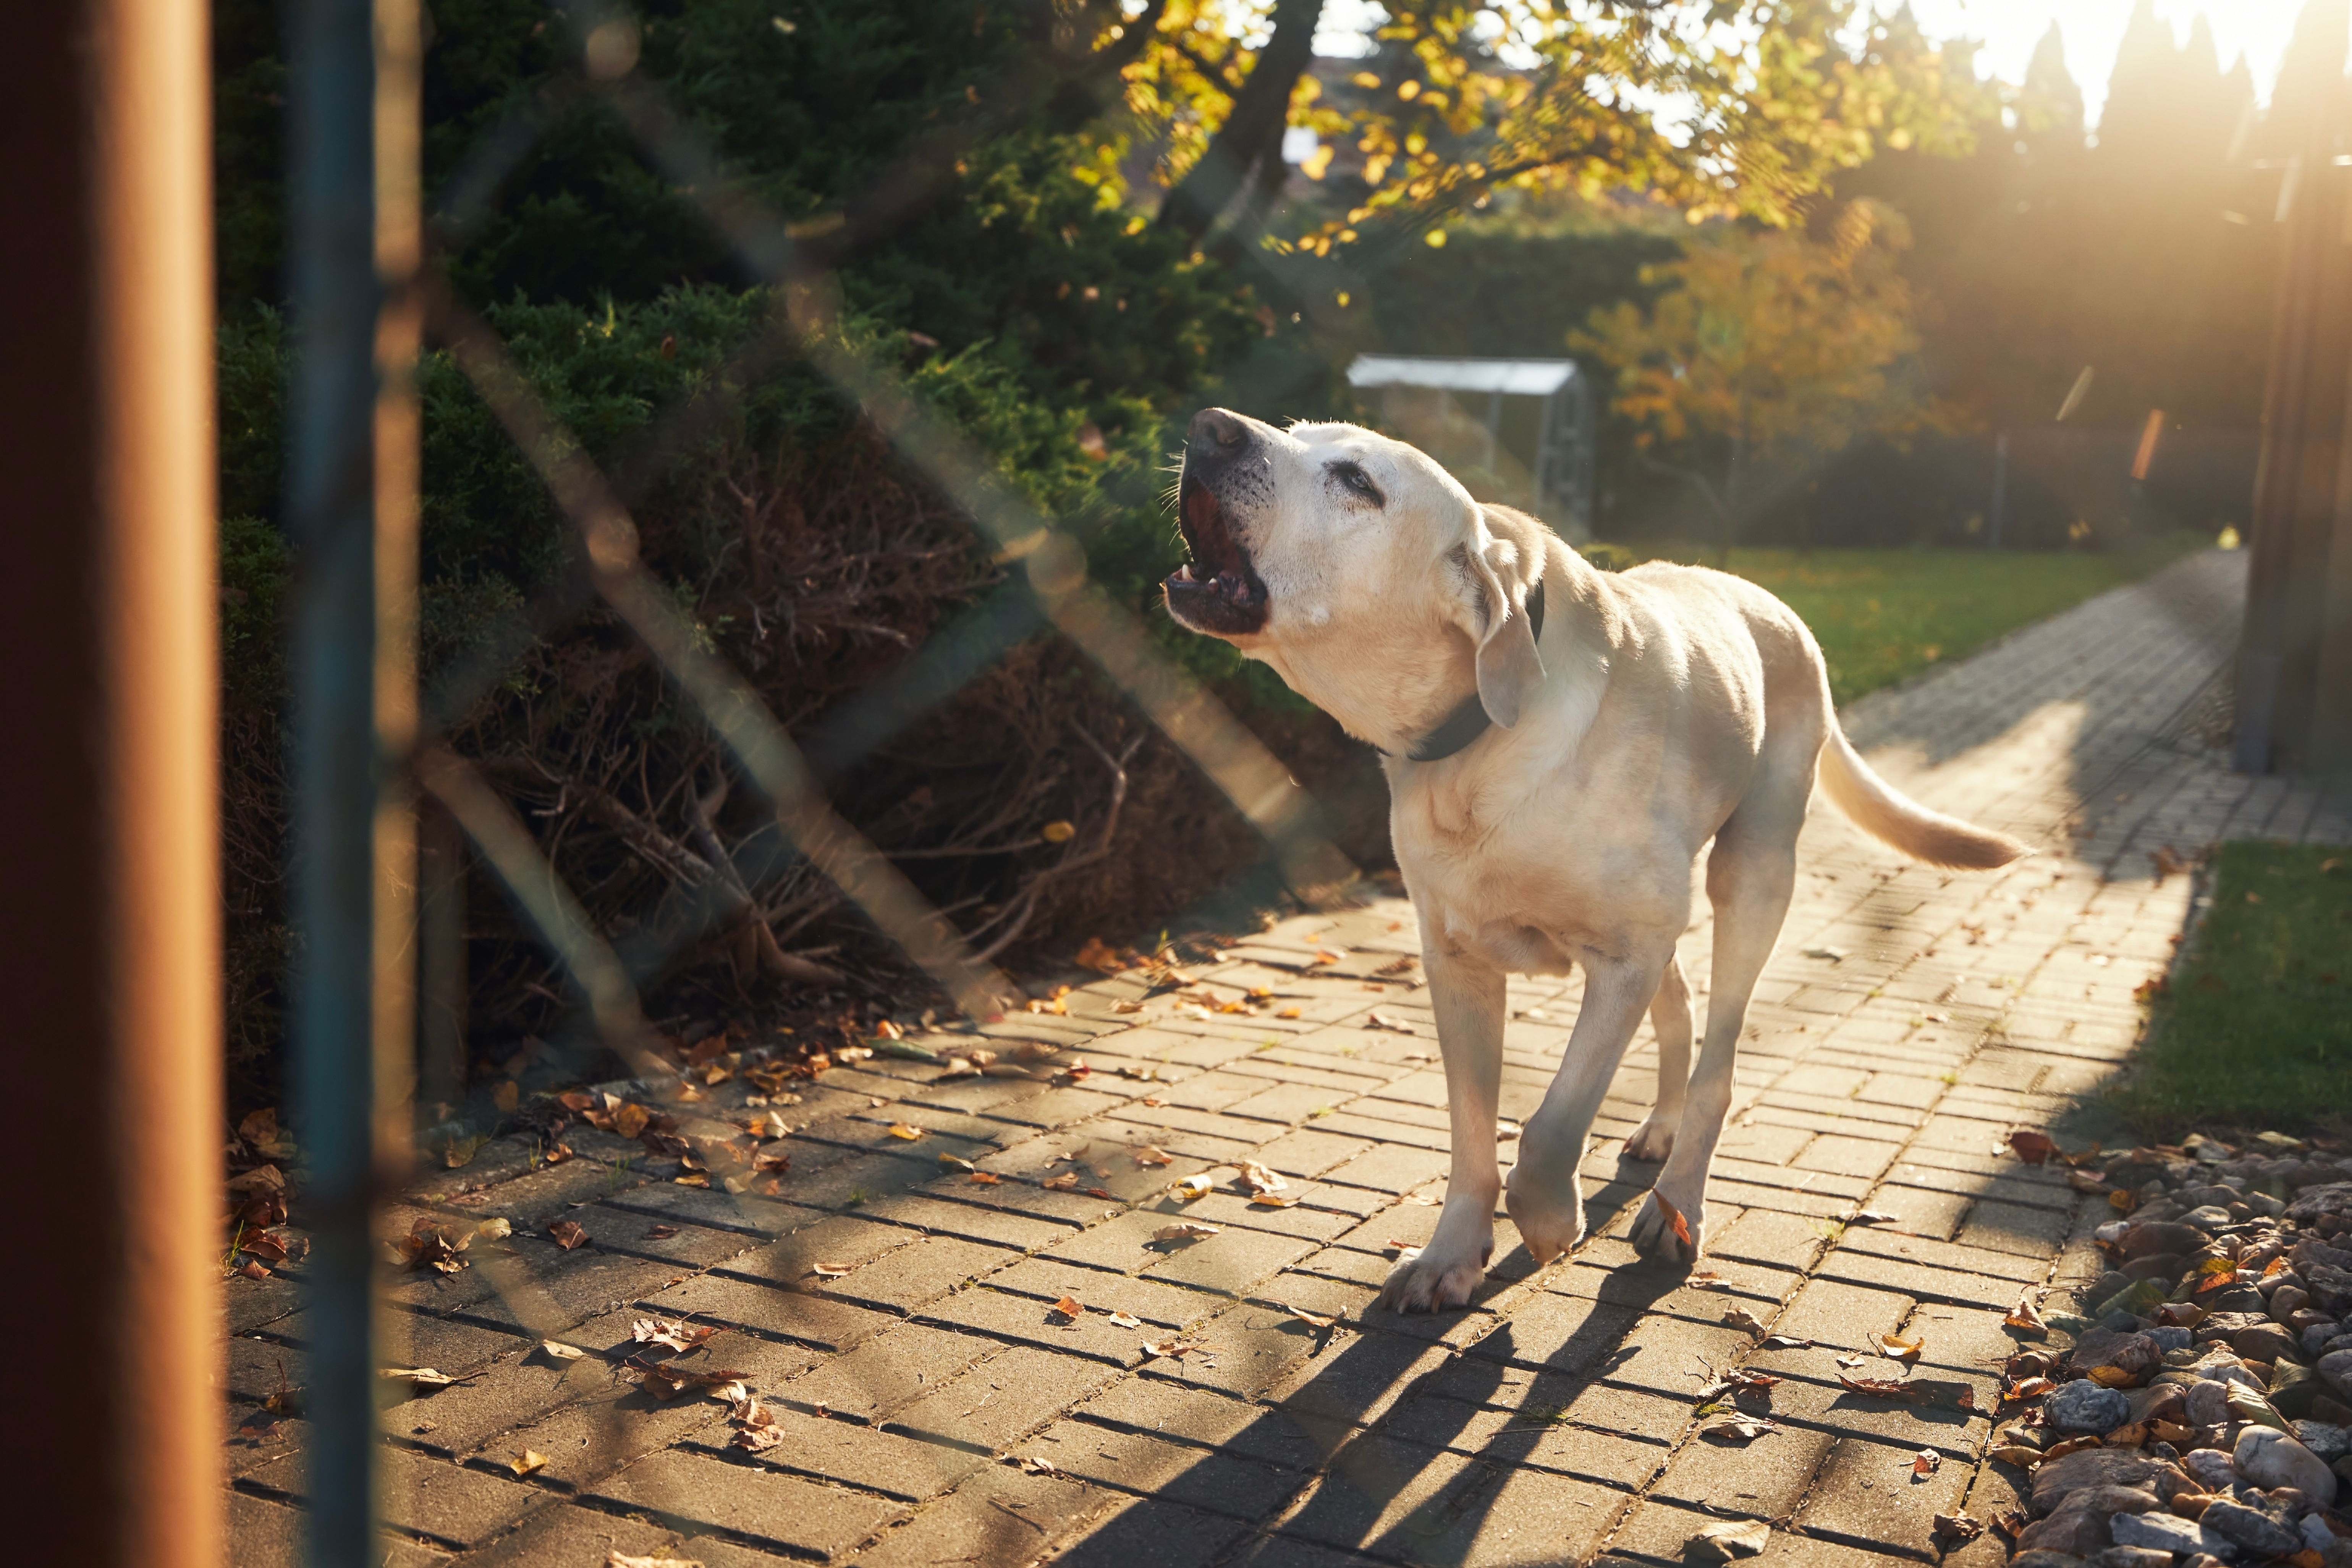 Barking dog behind fence. Noisy labrador retriever guarding house. | Source: Shutterstock